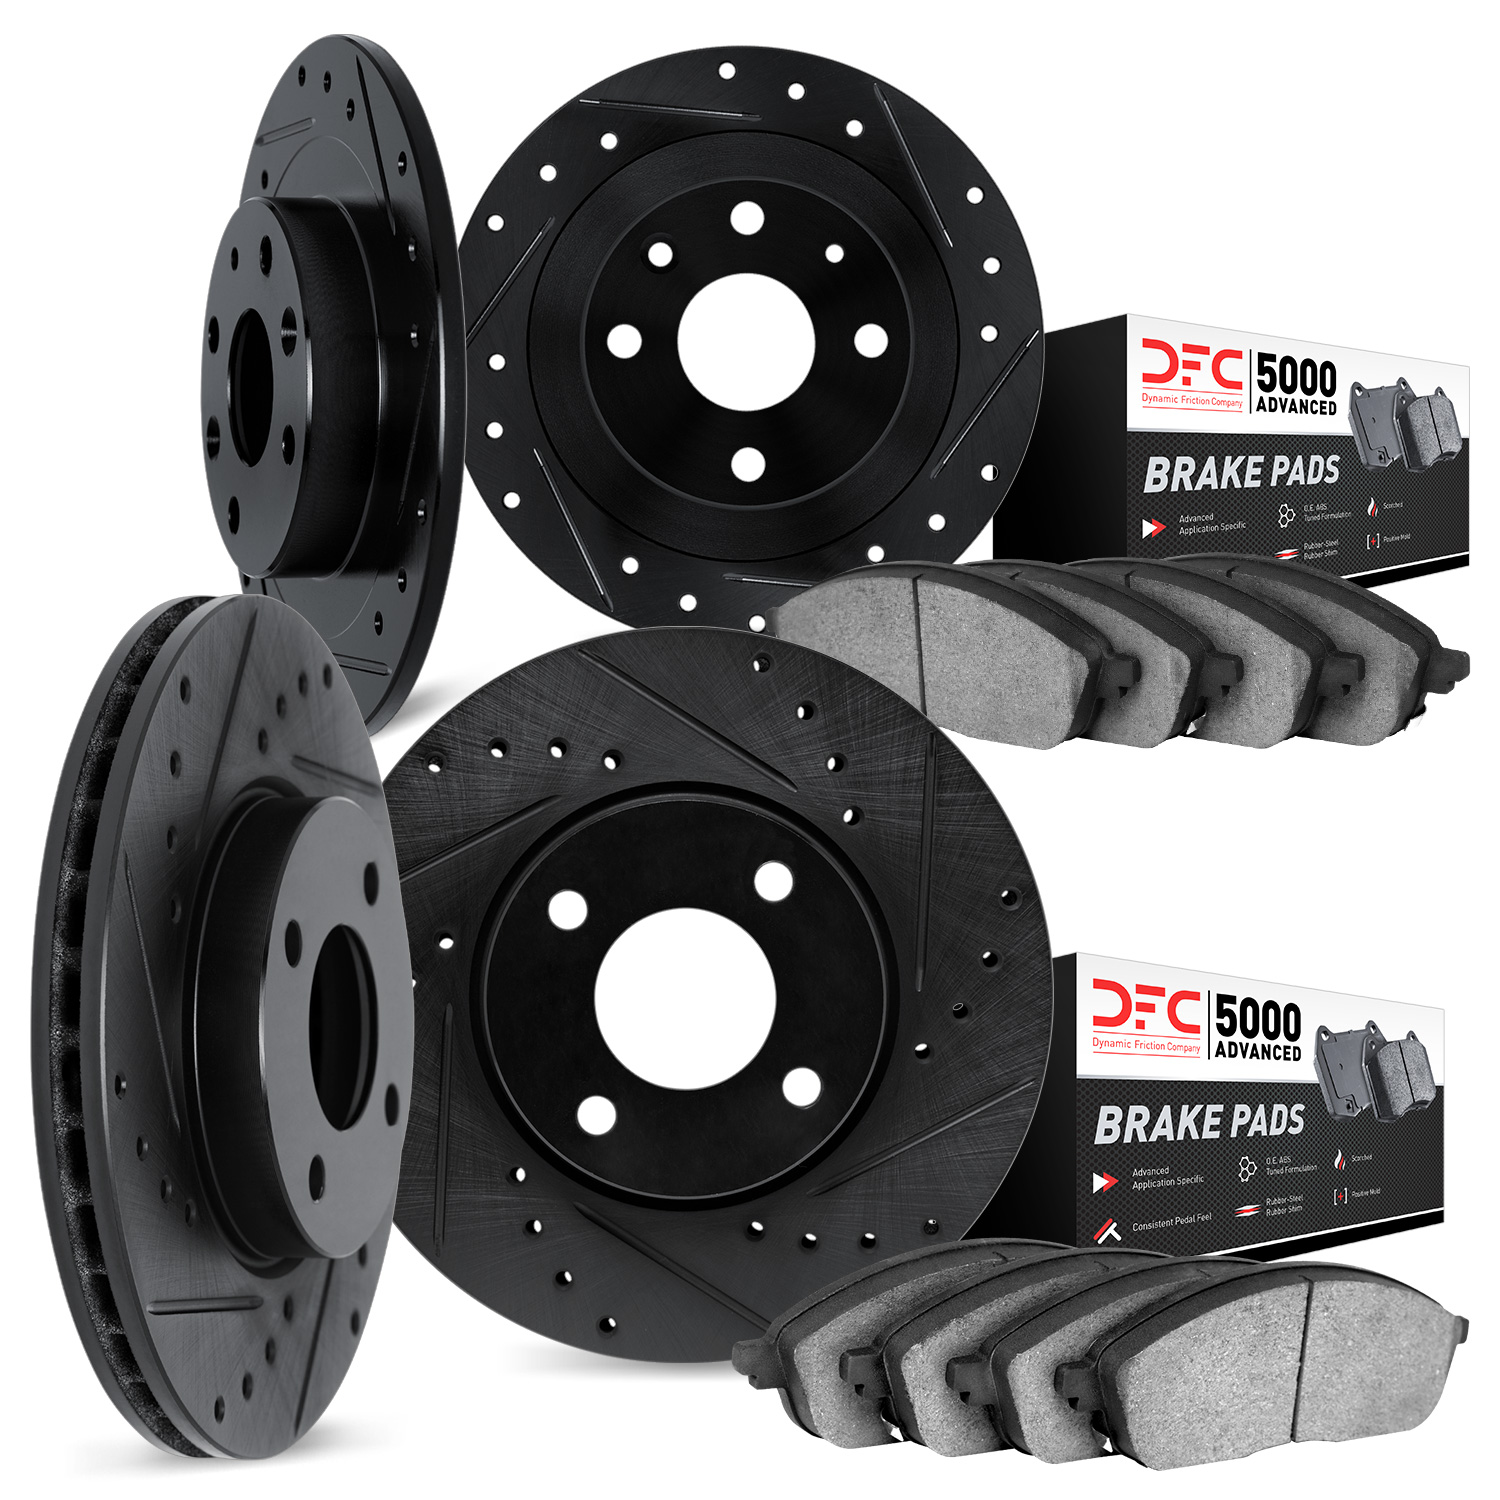 8504-01003 Drilled/Slotted Brake Rotors w/5000 Advanced Brake Pads Kit [Black], 2007-2010 Multiple Makes/Models, Position: Front